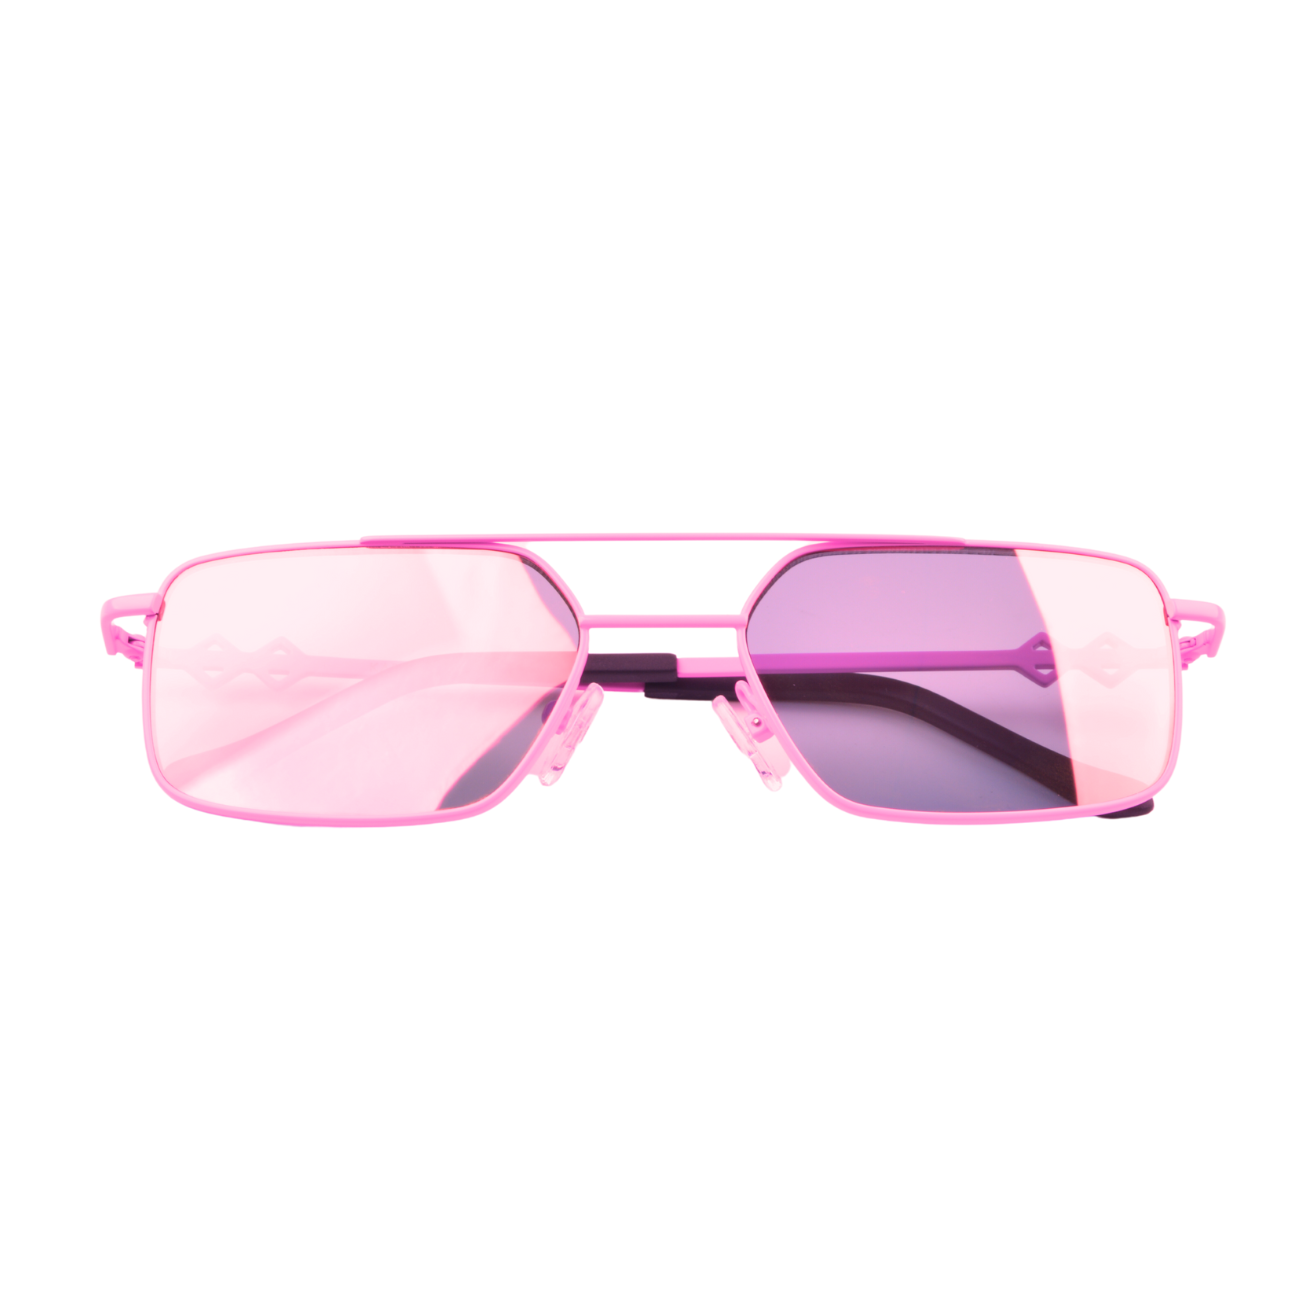 Front view | Rectangle sunglasses with black lenses and black frames | Metal | Devon| Women's, men's, and unisex sunglasses | Karen Wazen Eyewear